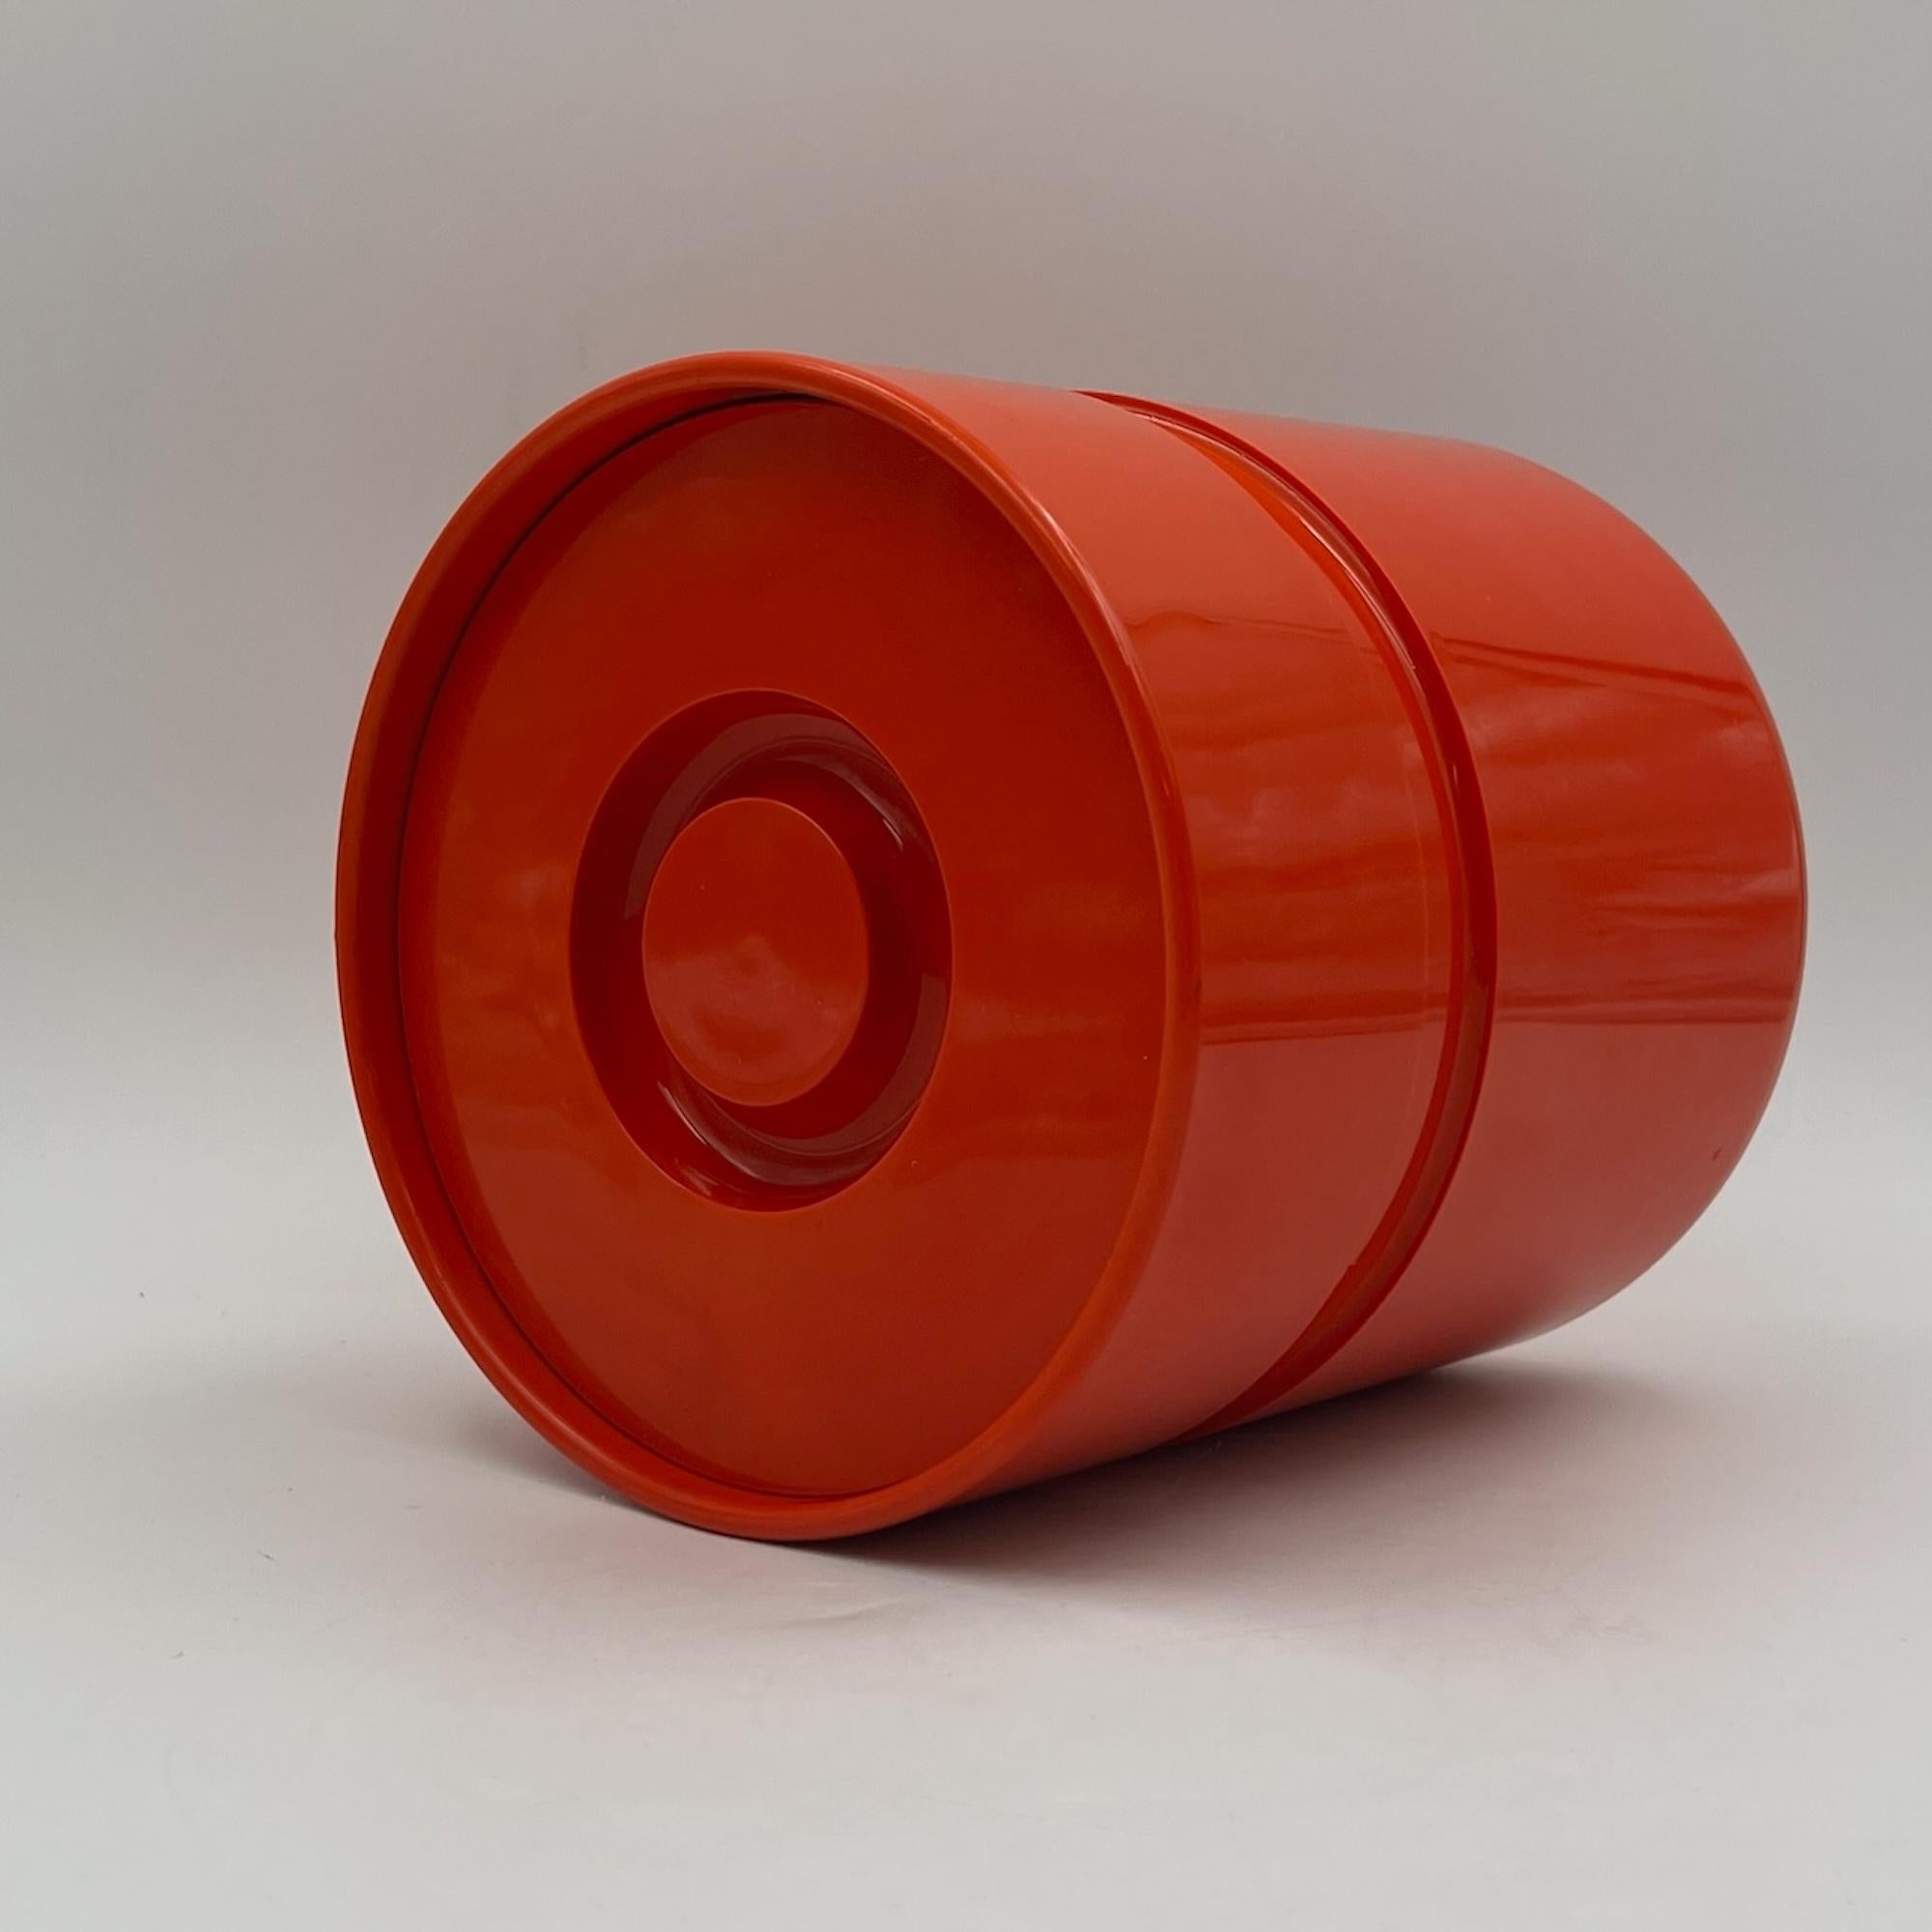 70s Orange Ice Bucket Sergio Asti for Heller - Iconic Italian Design Tableware 2